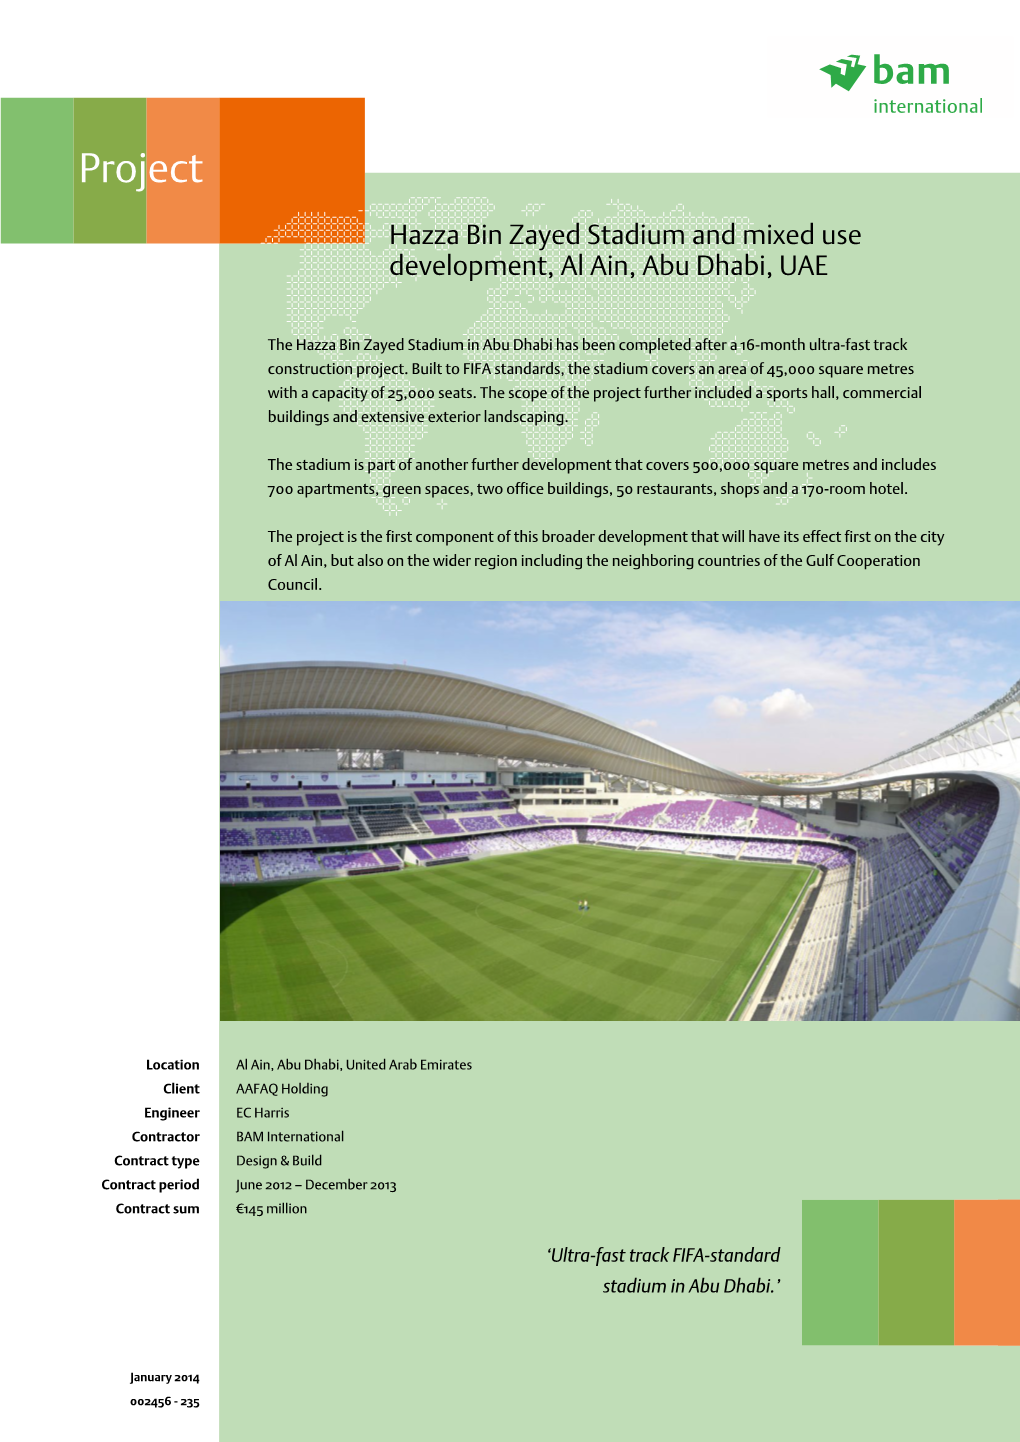 Hazza Bin Zayed Stadium and Mixed Use Development, Al Ain, Abu Dhabi, UAE